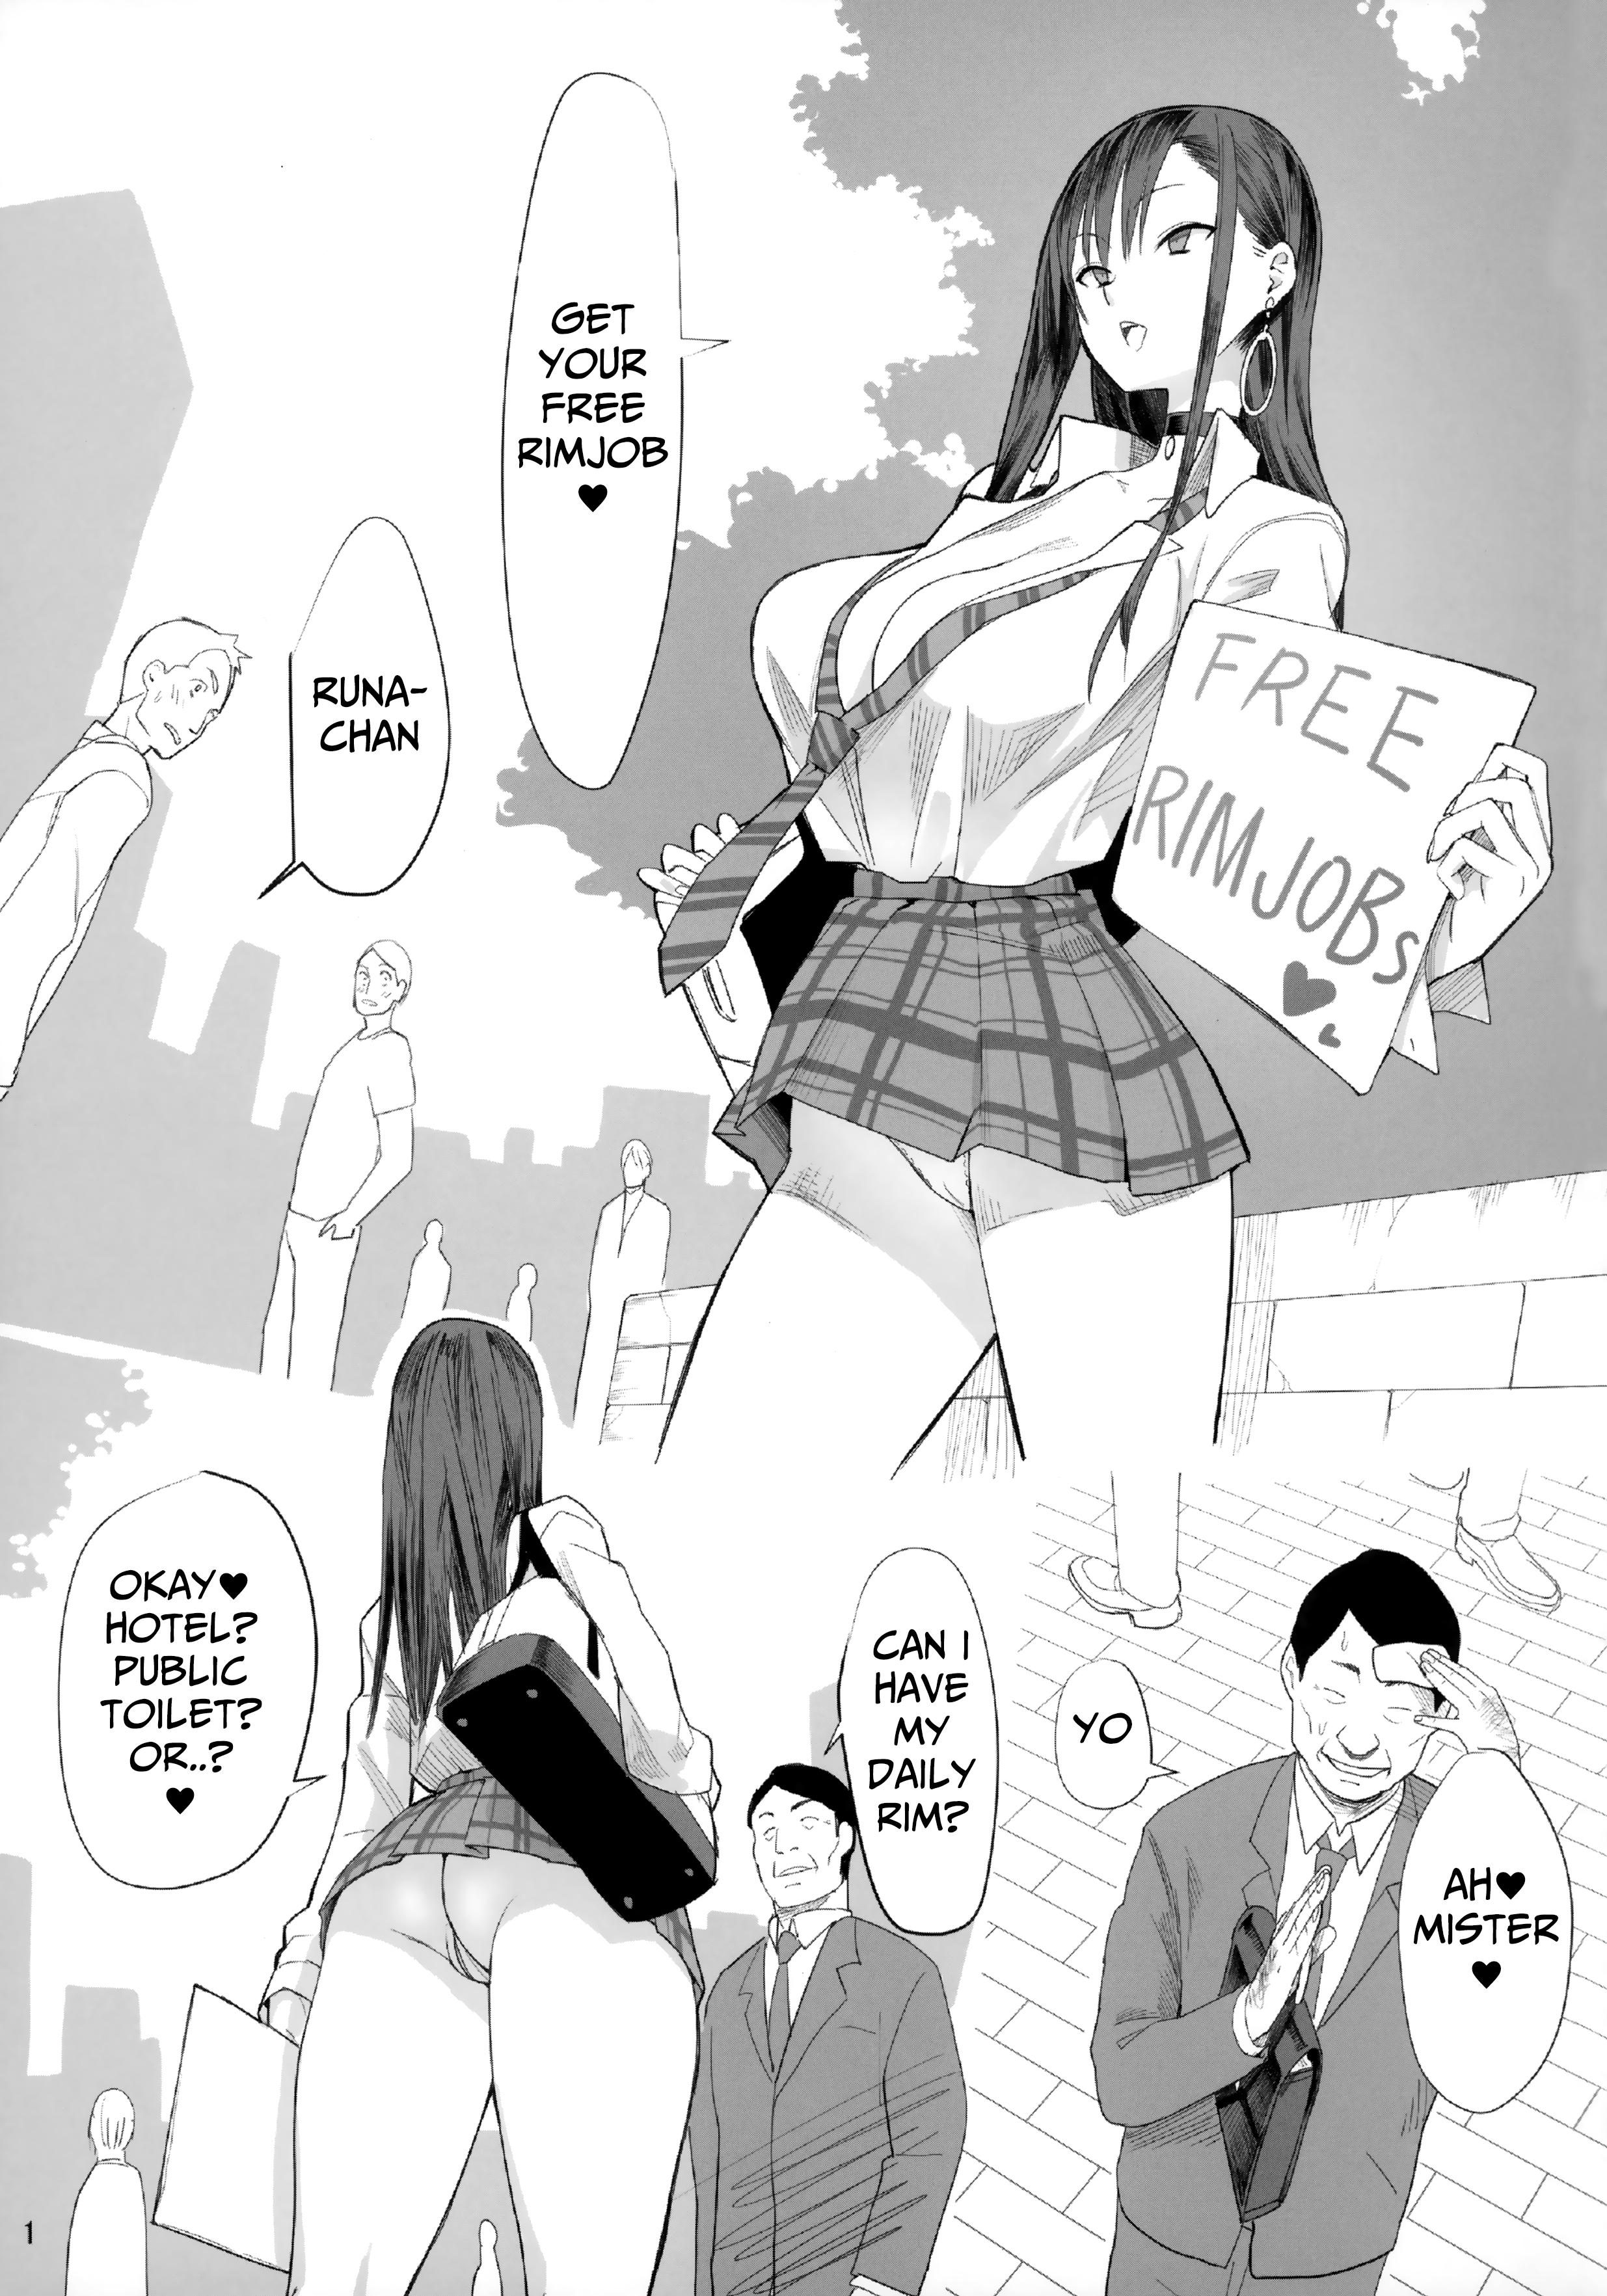 Page 2 | FREE RIMJOBS - Original Hentai Doujinshi by Kokusan Jk - Pururin,  Free Online Hentai Manga and Doujinshi Reader